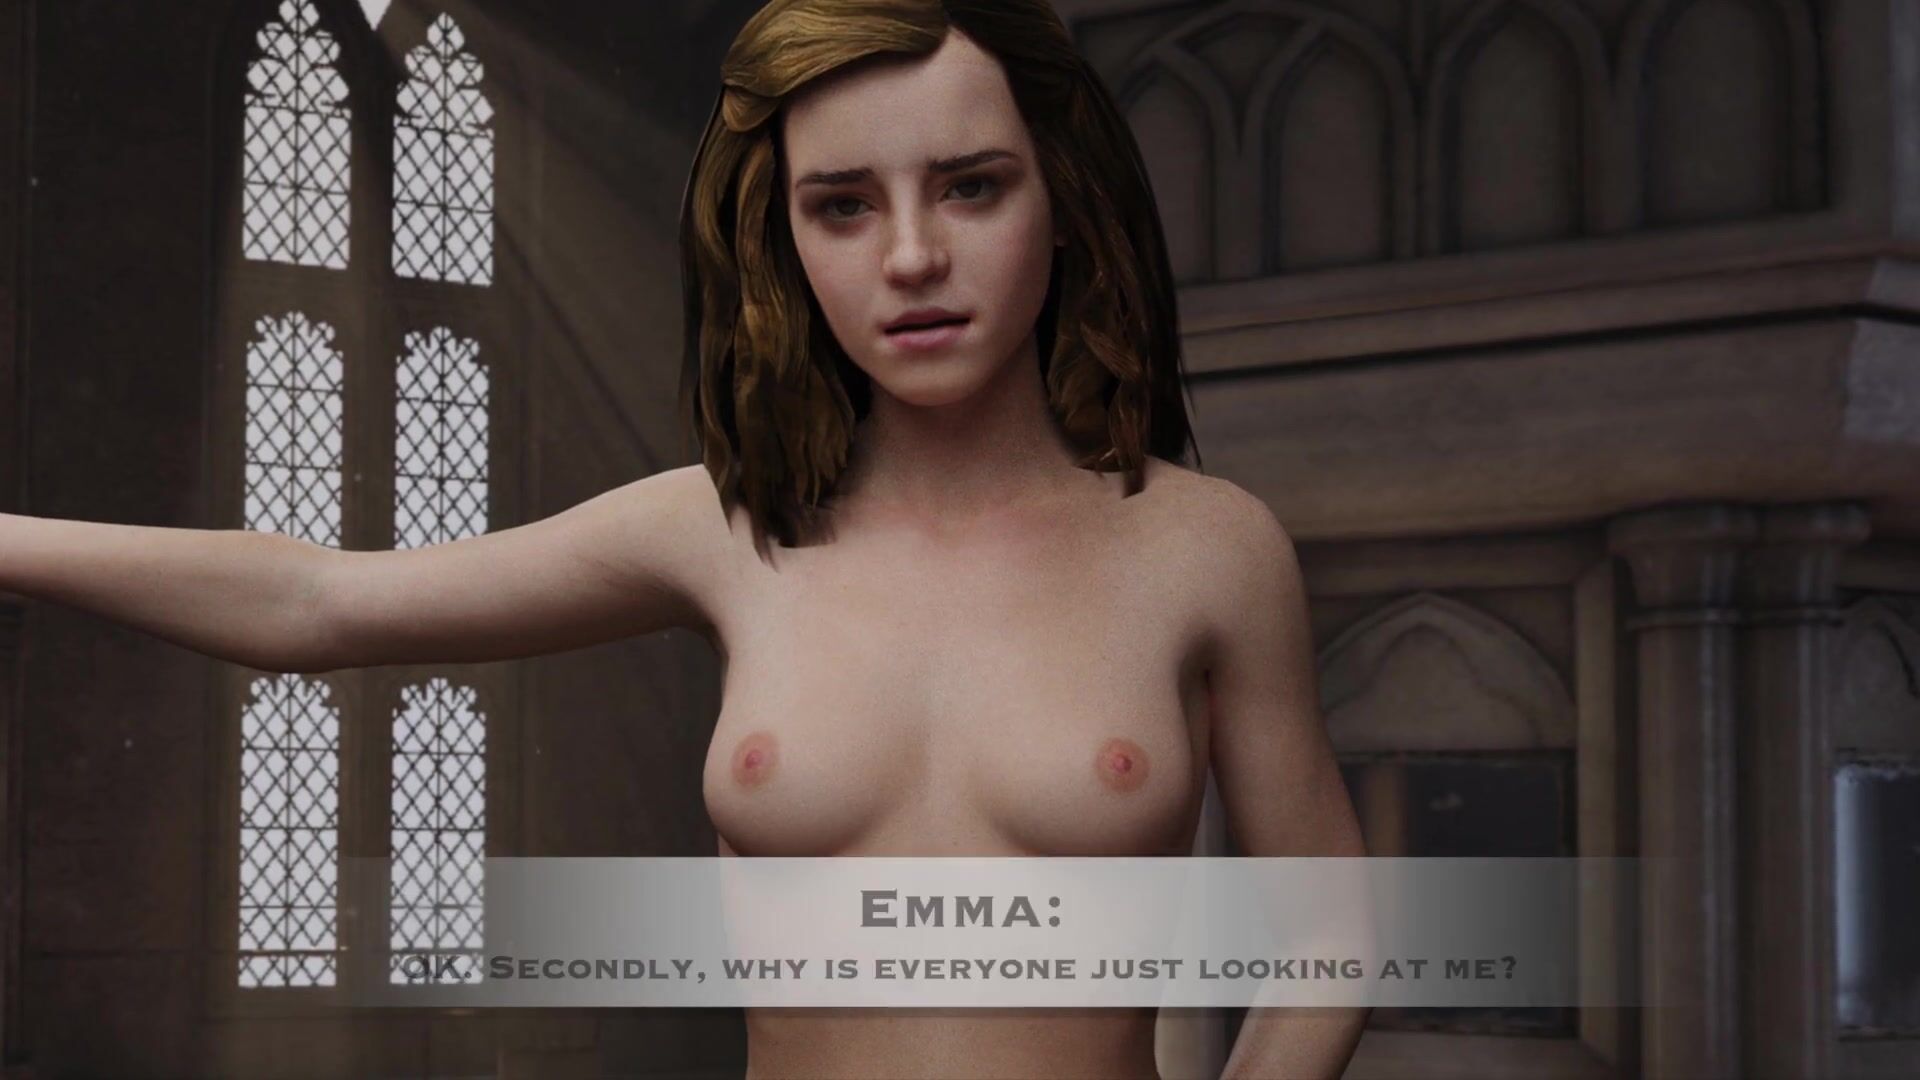 Harry Potter Hermione Porn 3d - After 'Harry Potter' Emma Watson Starred In Porn (Parody 3D Cartoon) -  FAPCAT